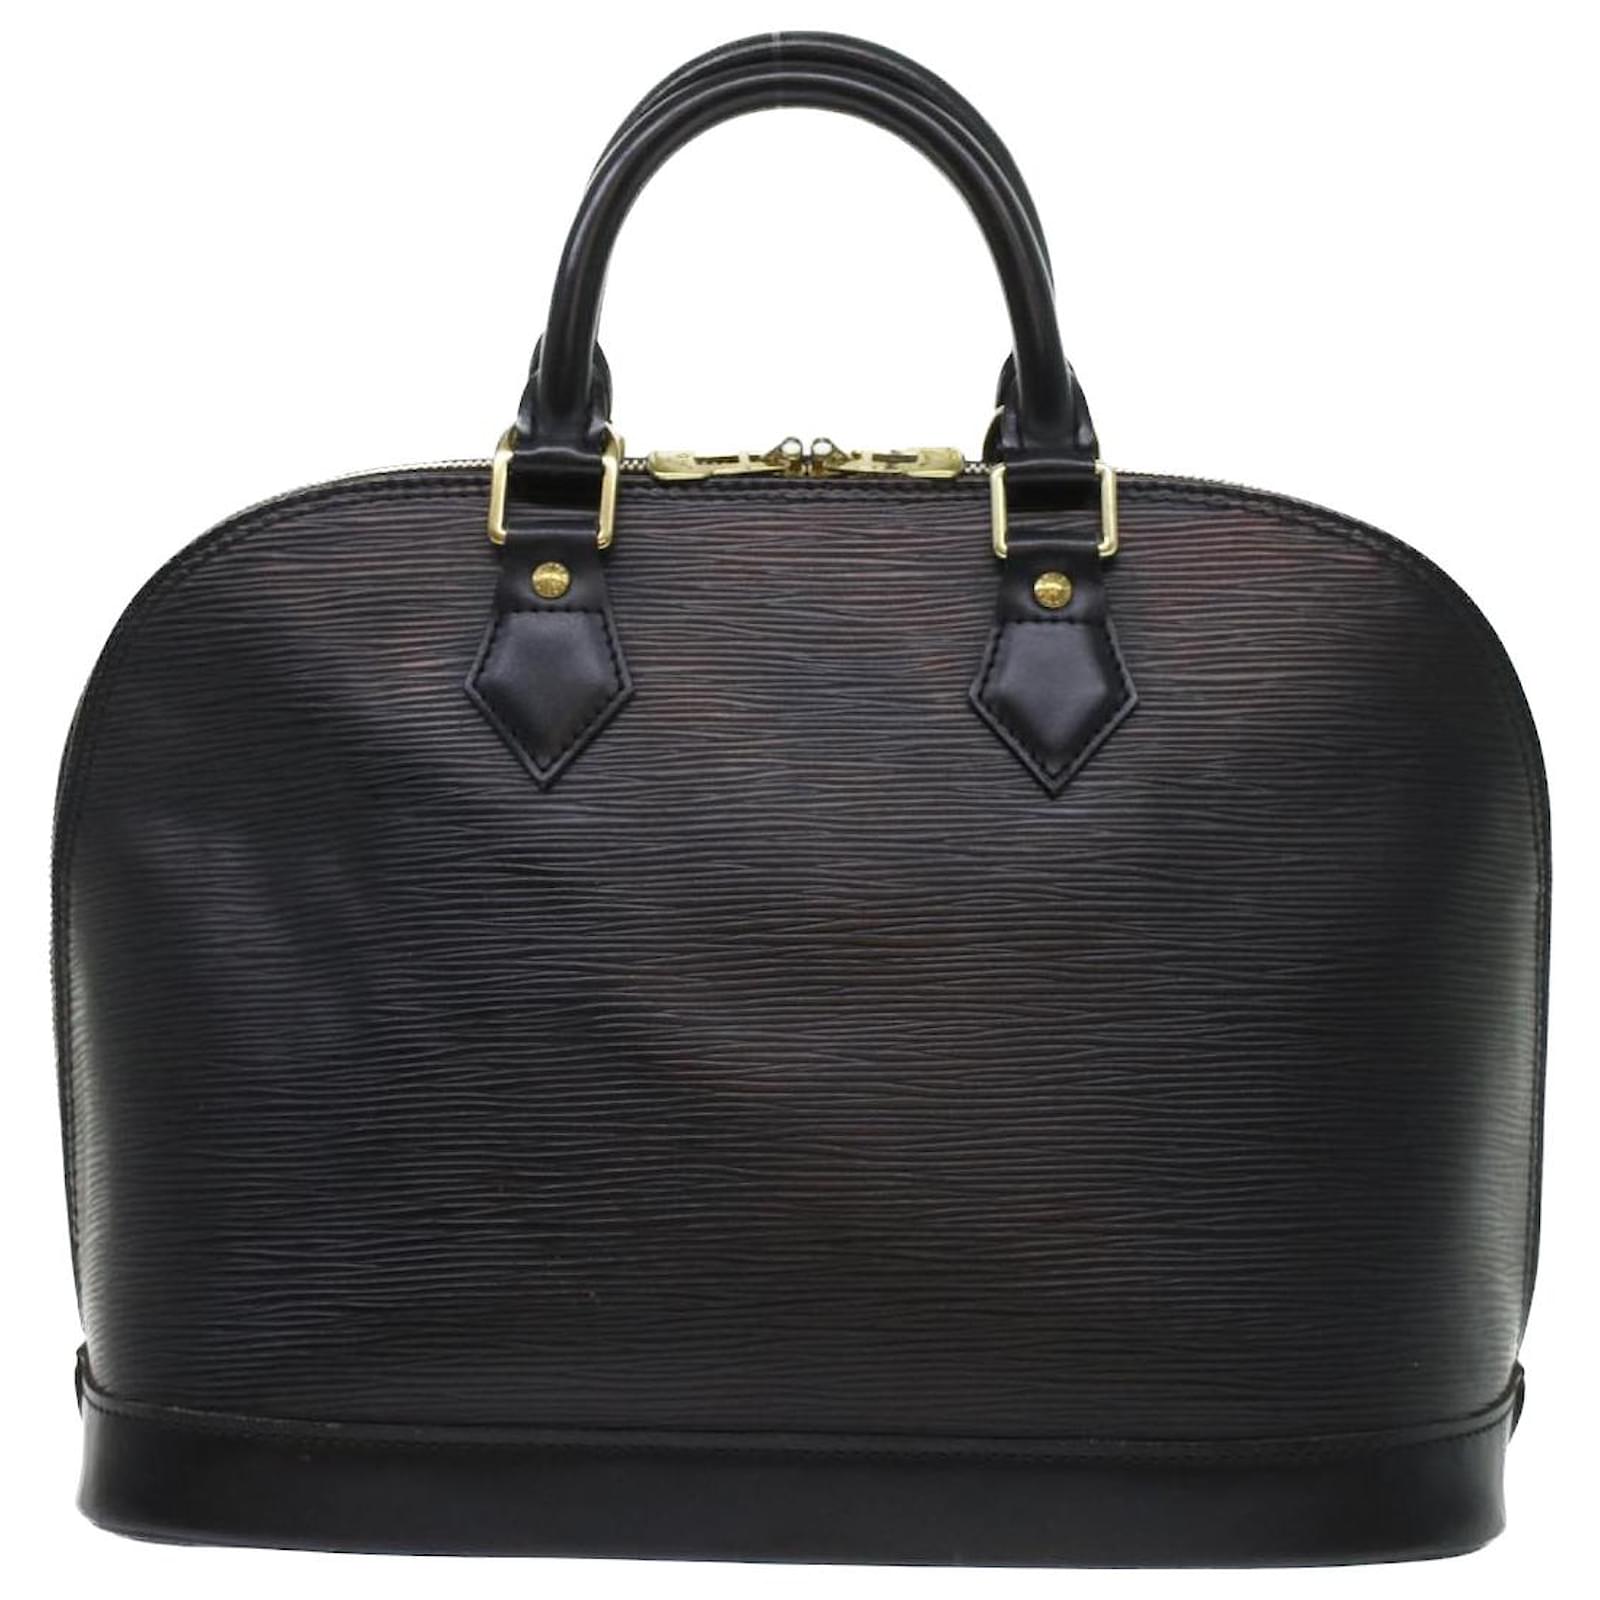 Louis Vuitton Alma Shoulder bag in Red Patent leather Louis Vuitton | The  Luxury Closet